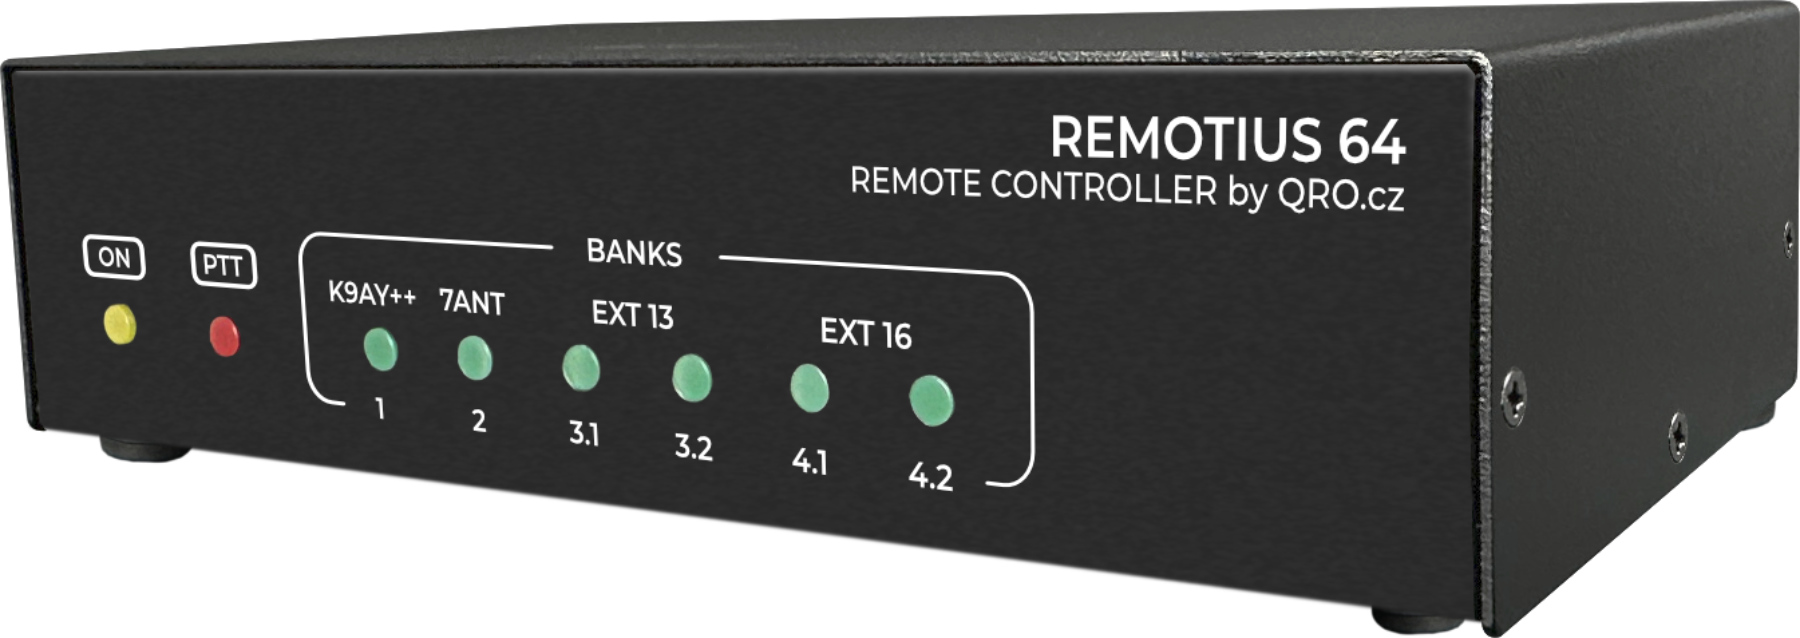 remotius 64 controller by qro.cz hamparts.shop